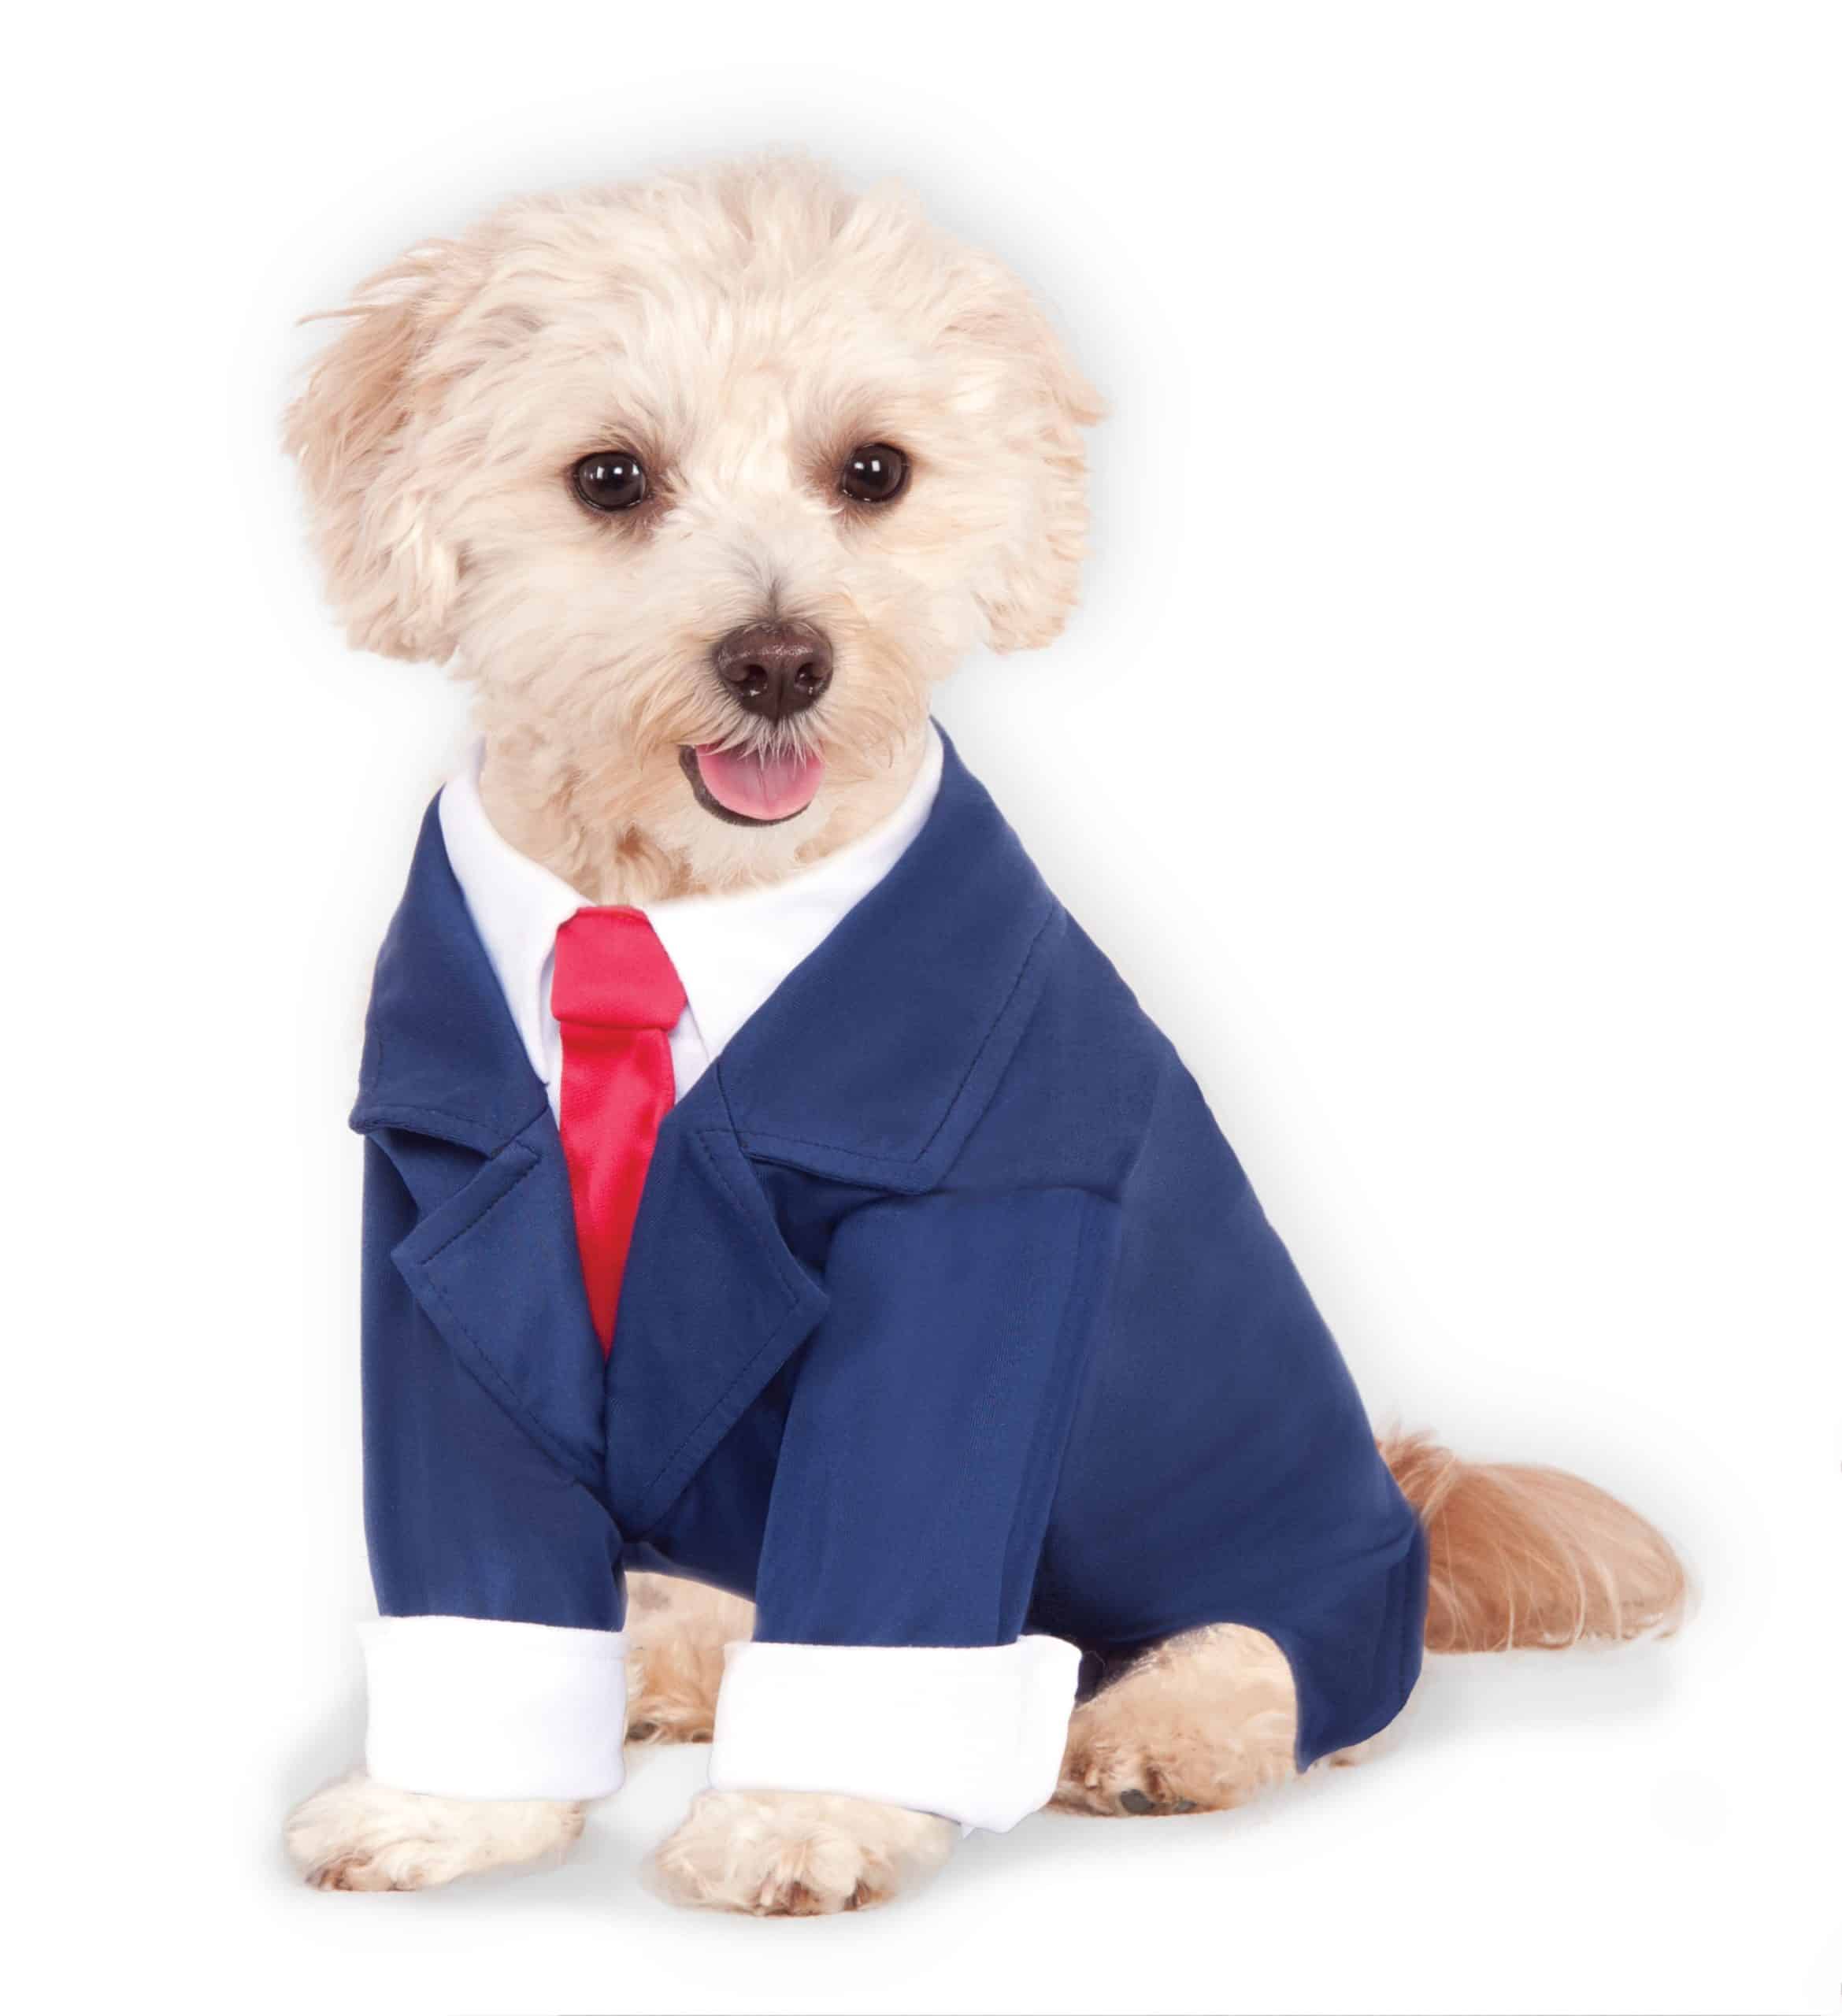 Dog Wearing Suit